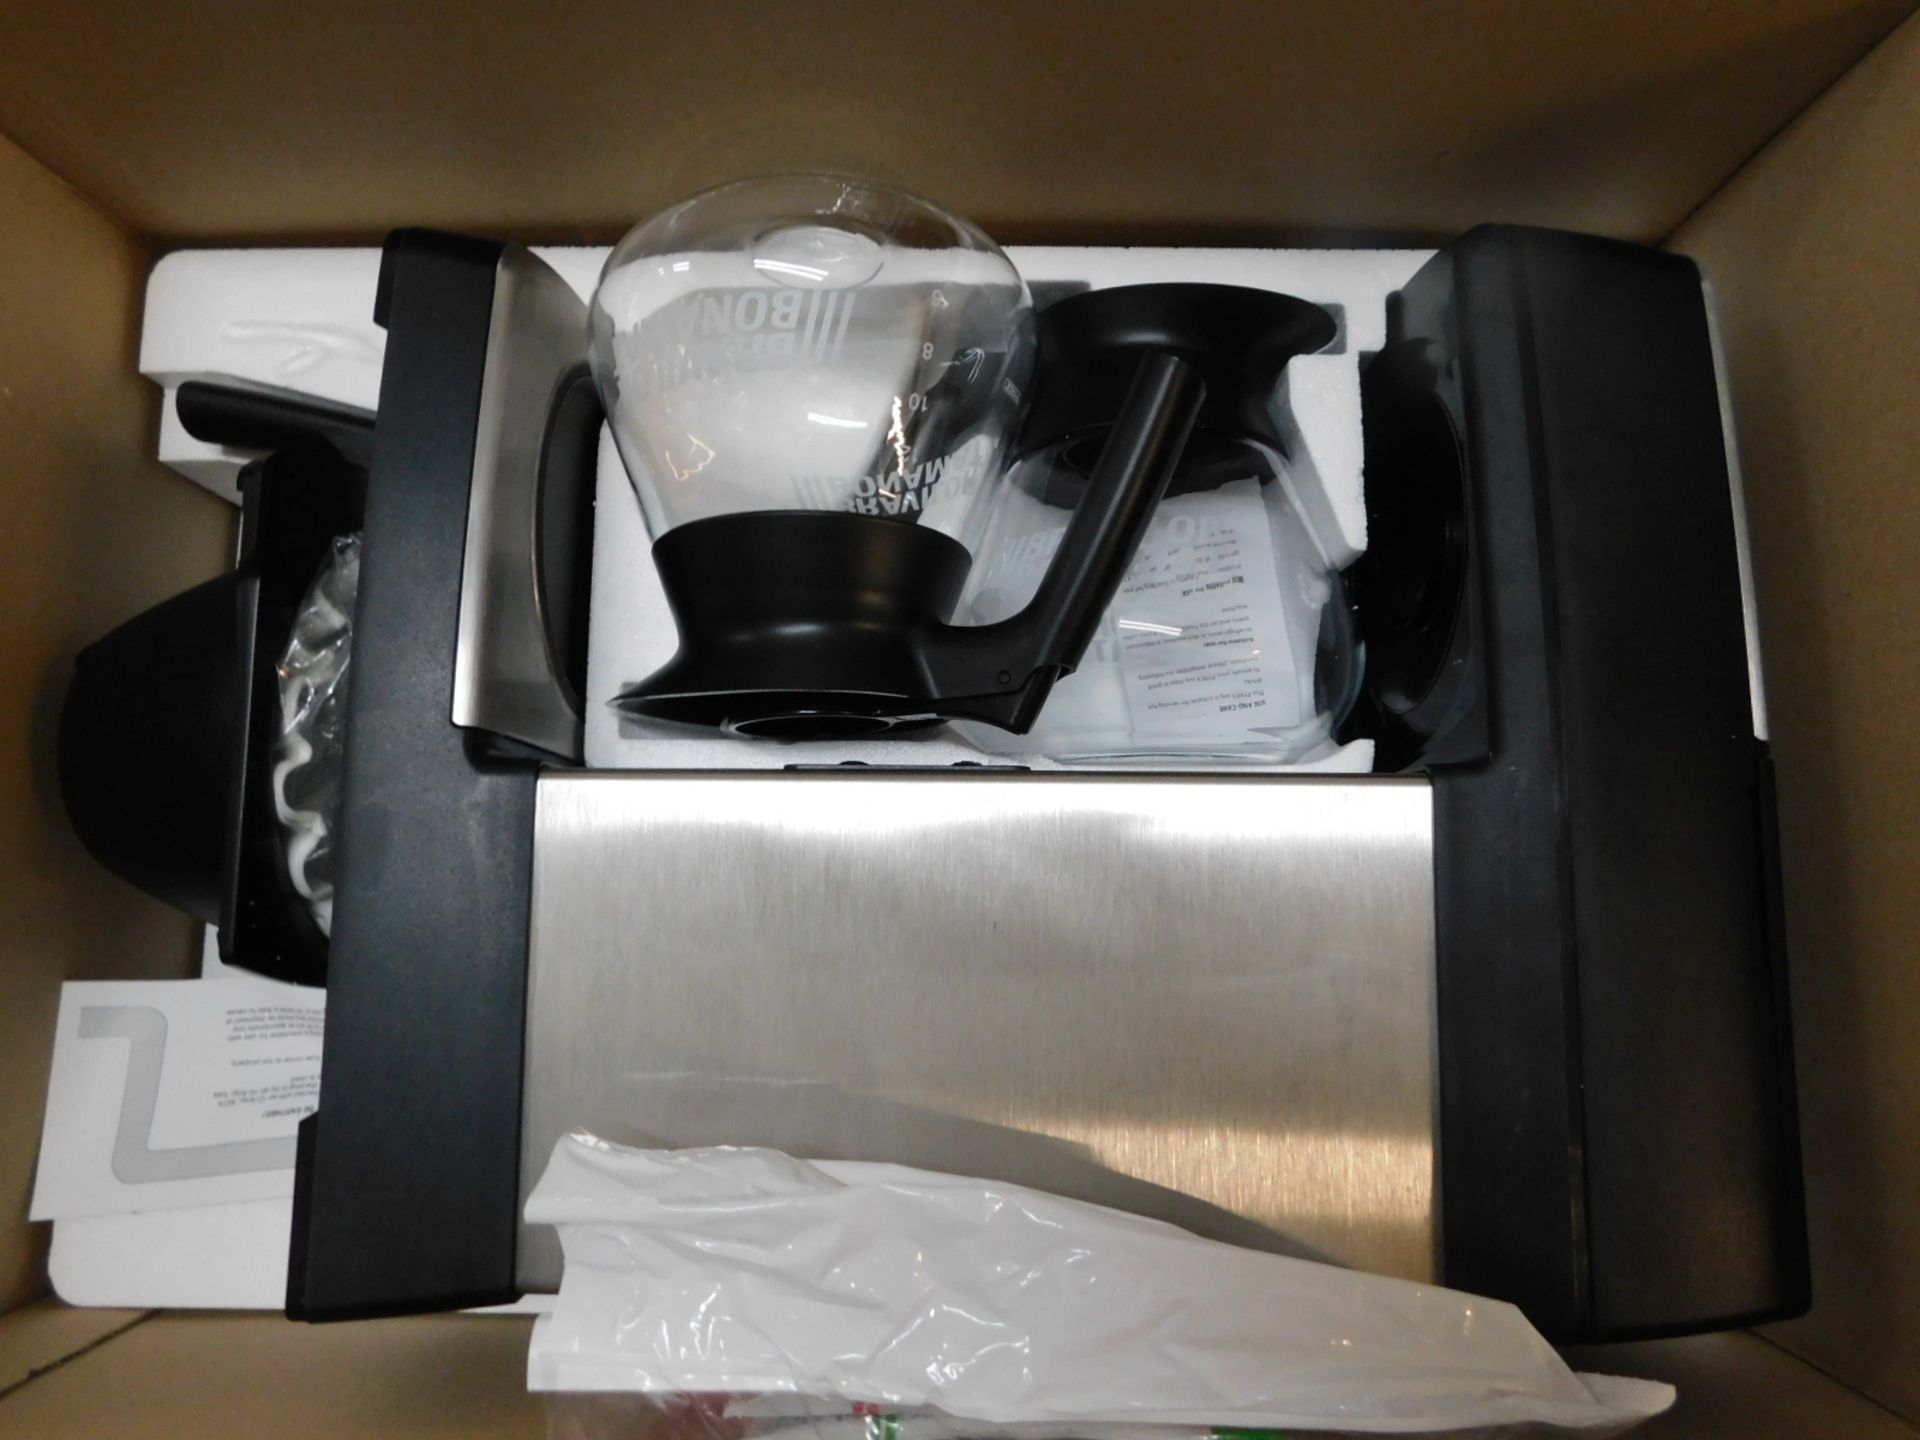 1 BOXED BRAVILOR BONAMAT NOVO 2 COFFE MACHINE RRP Â£249.99